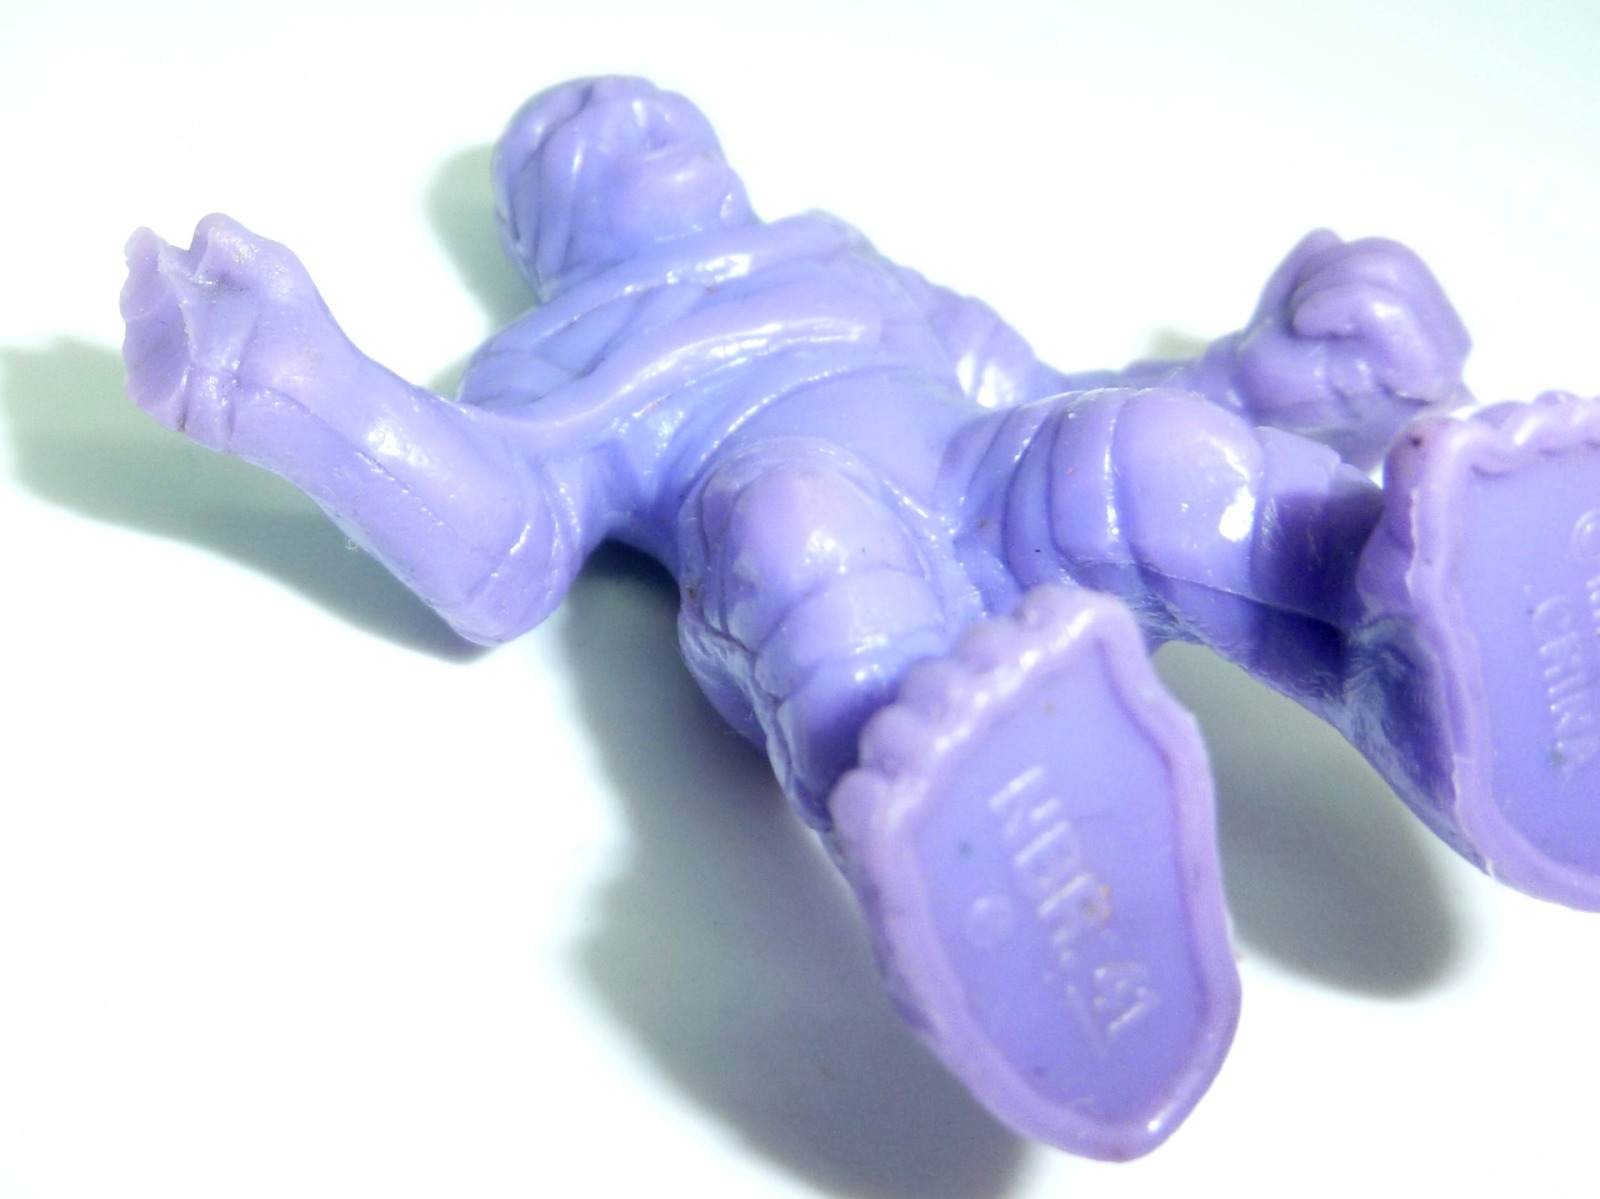 Mummy - defective purple No. 41 2